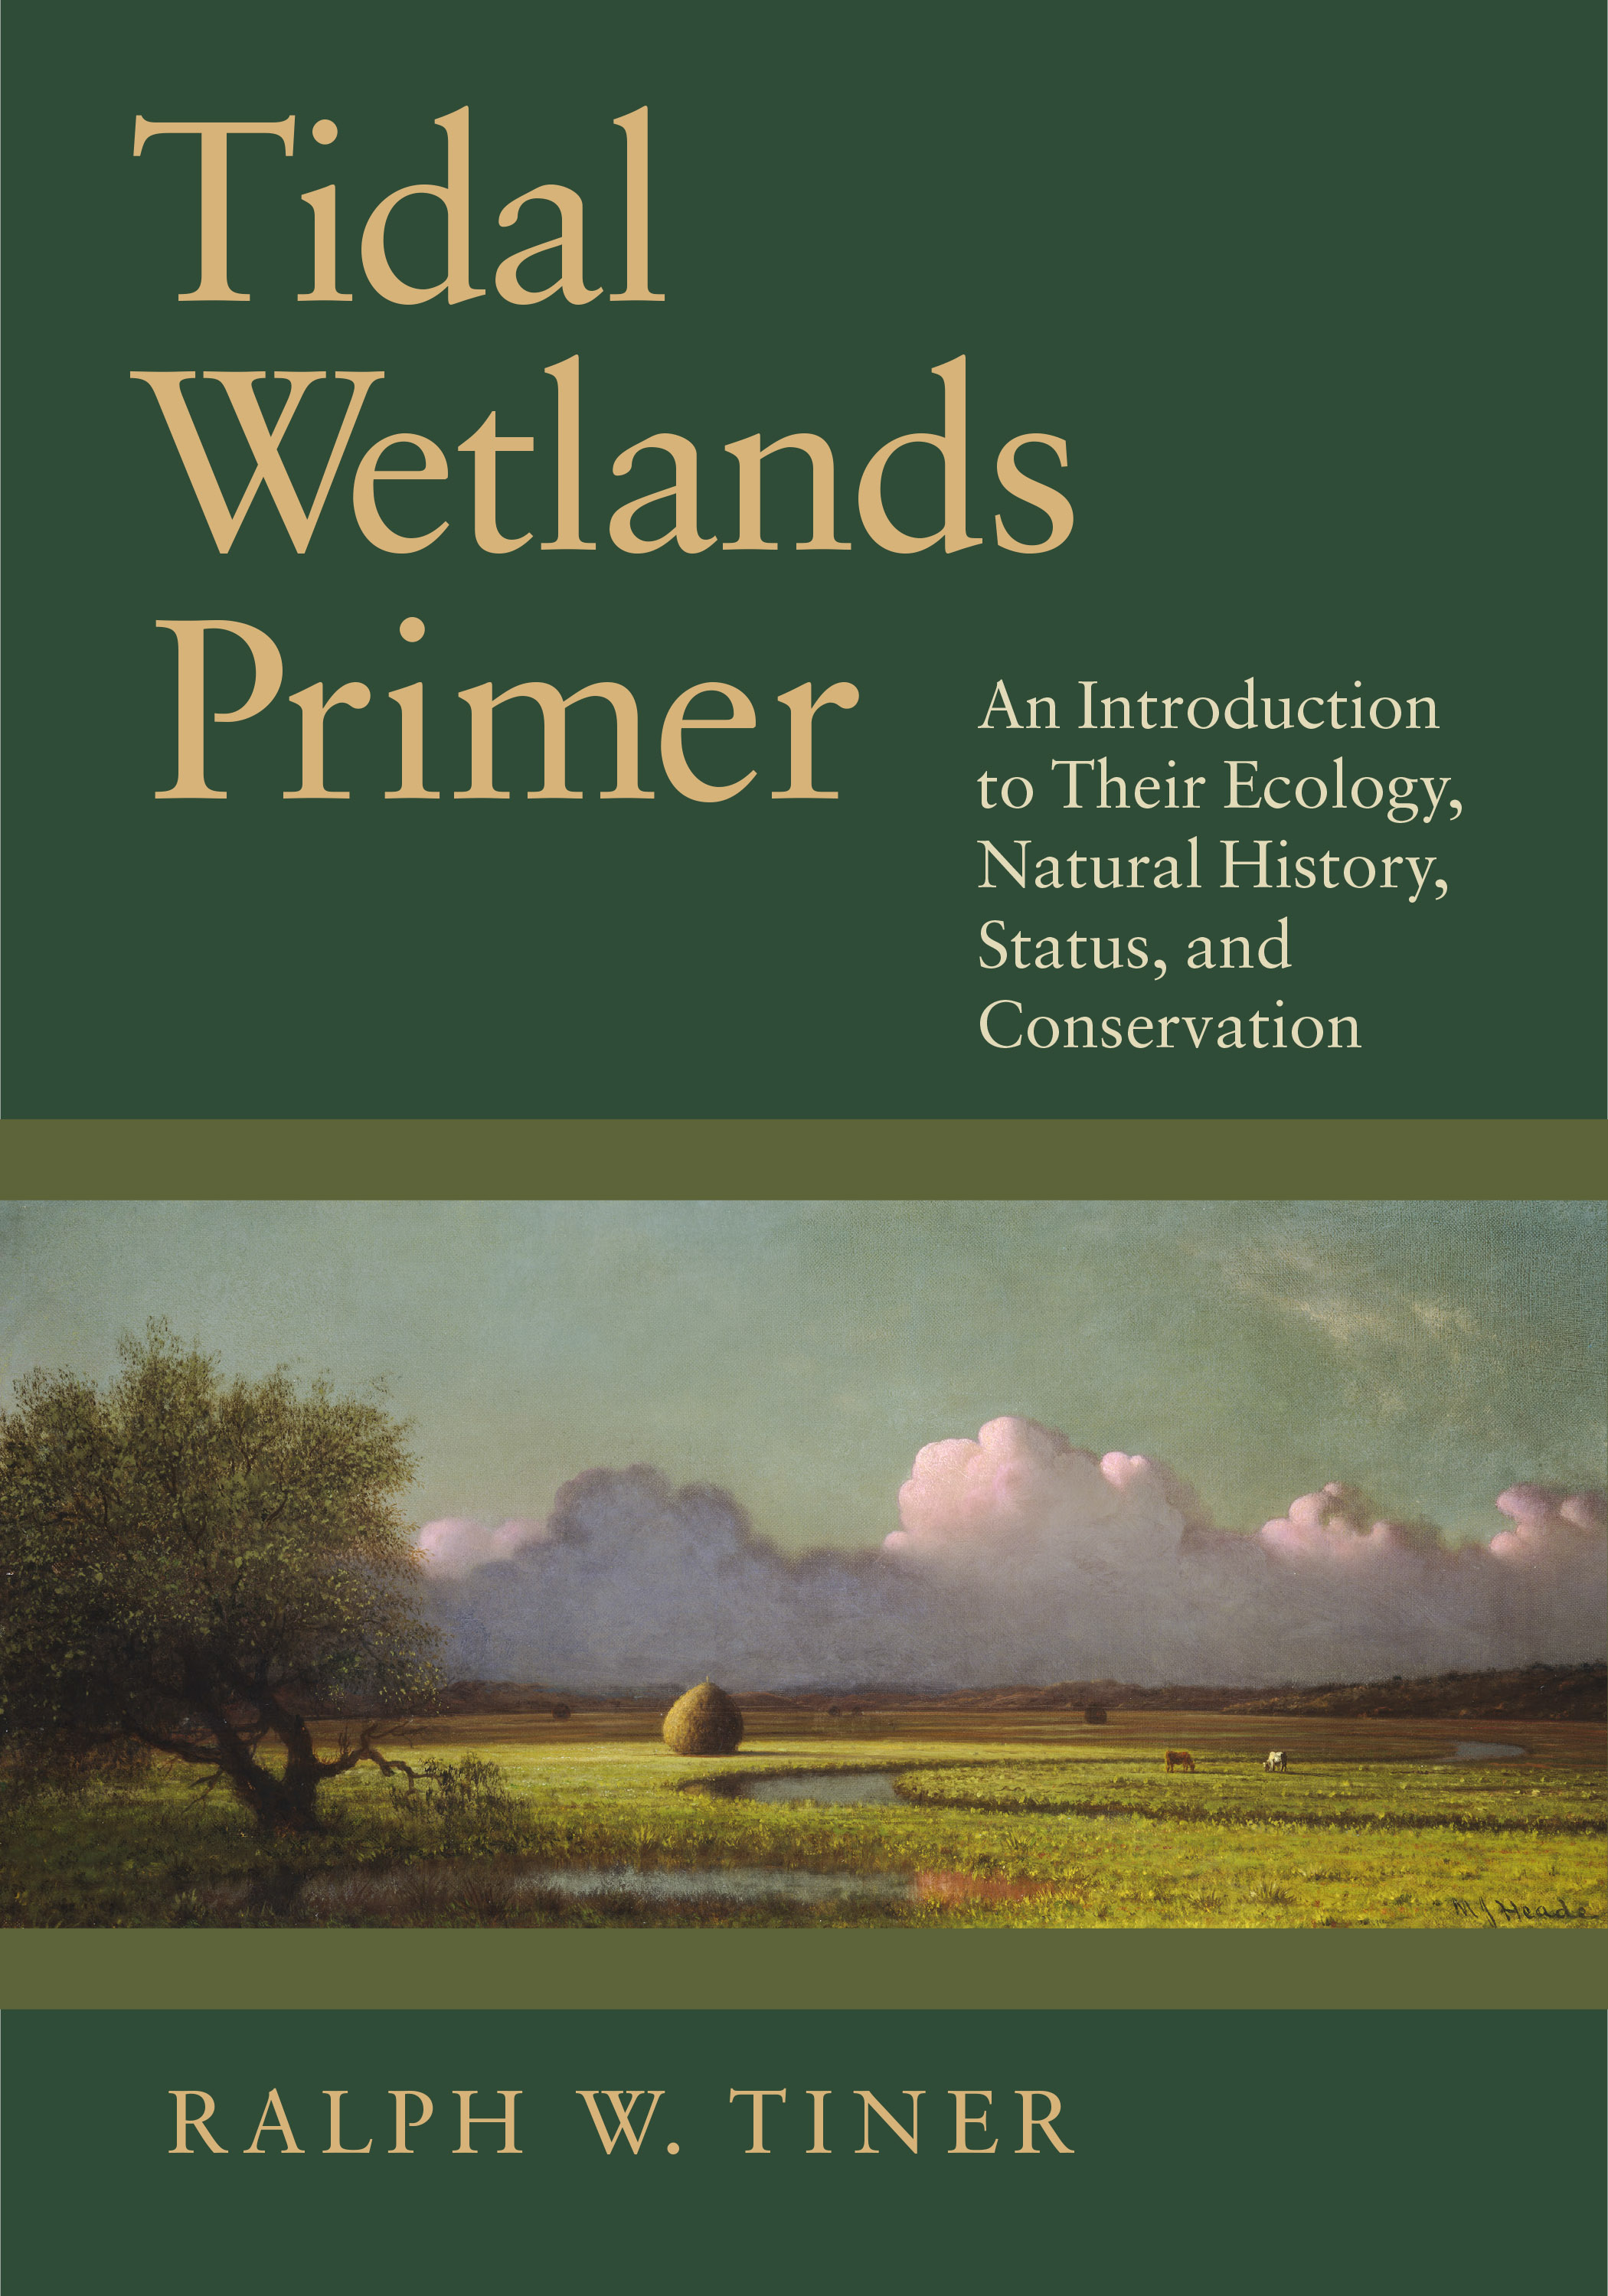 Tidal Wetlands Primer by Ralph Tiner